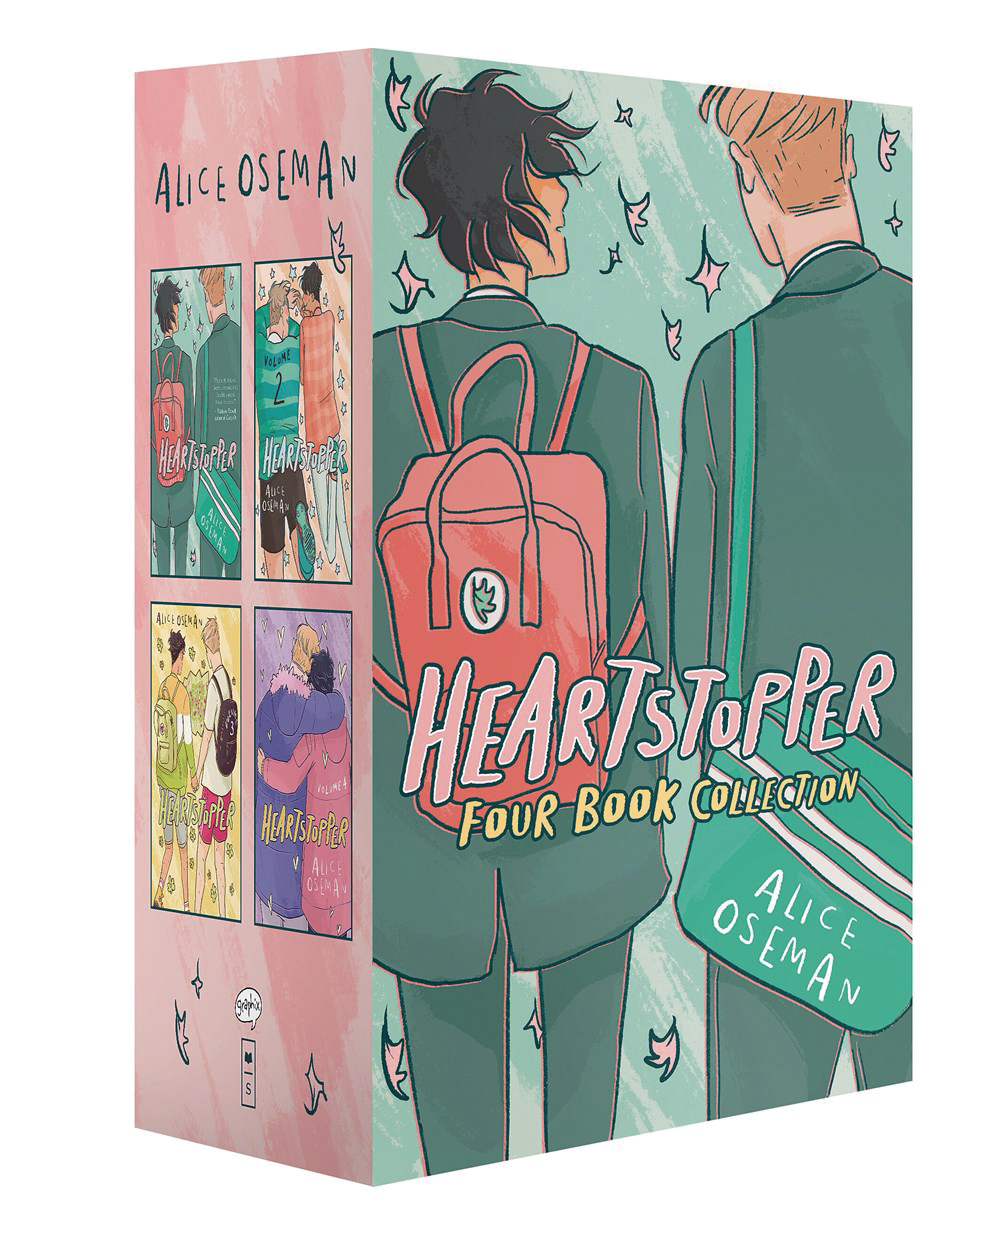 Heartstopper Graphic Novel 1-4 Box Set